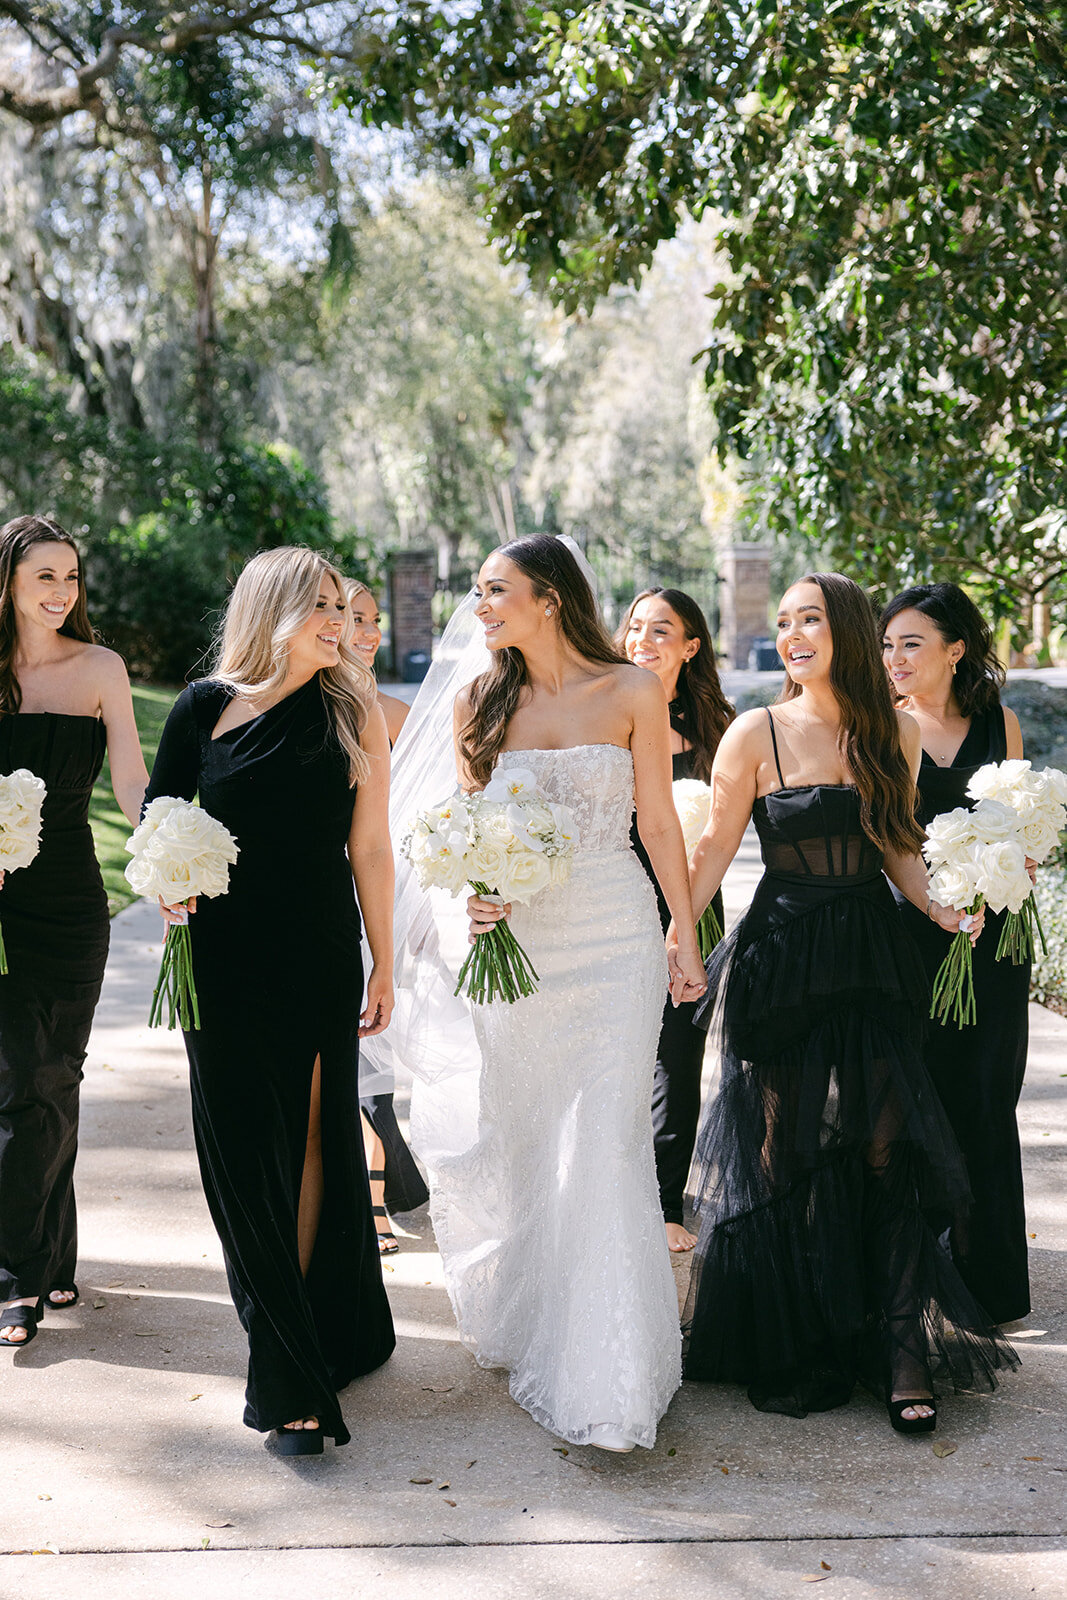 CORNELIA ZAISS PHOTOGRAPHY ASHLYN + RHETT WEDDING SNEAKS 33